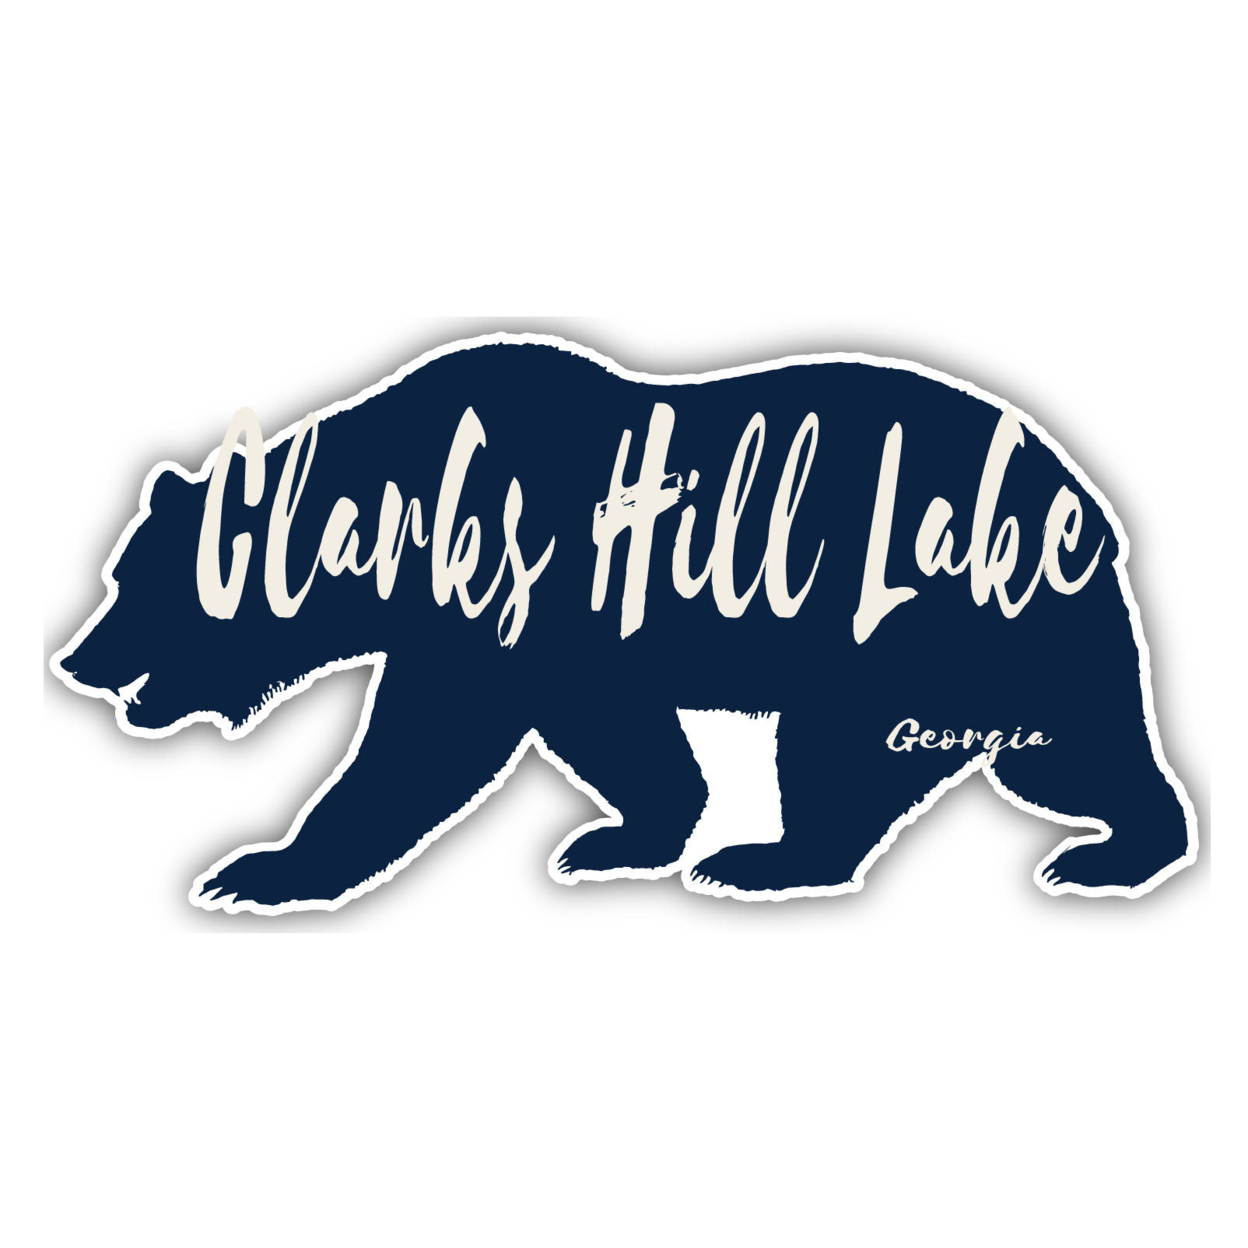 Clarks Hill Lake Georgia Souvenir Decorative Stickers (Choose Theme And Size) - Single Unit, 12-Inch, Bear